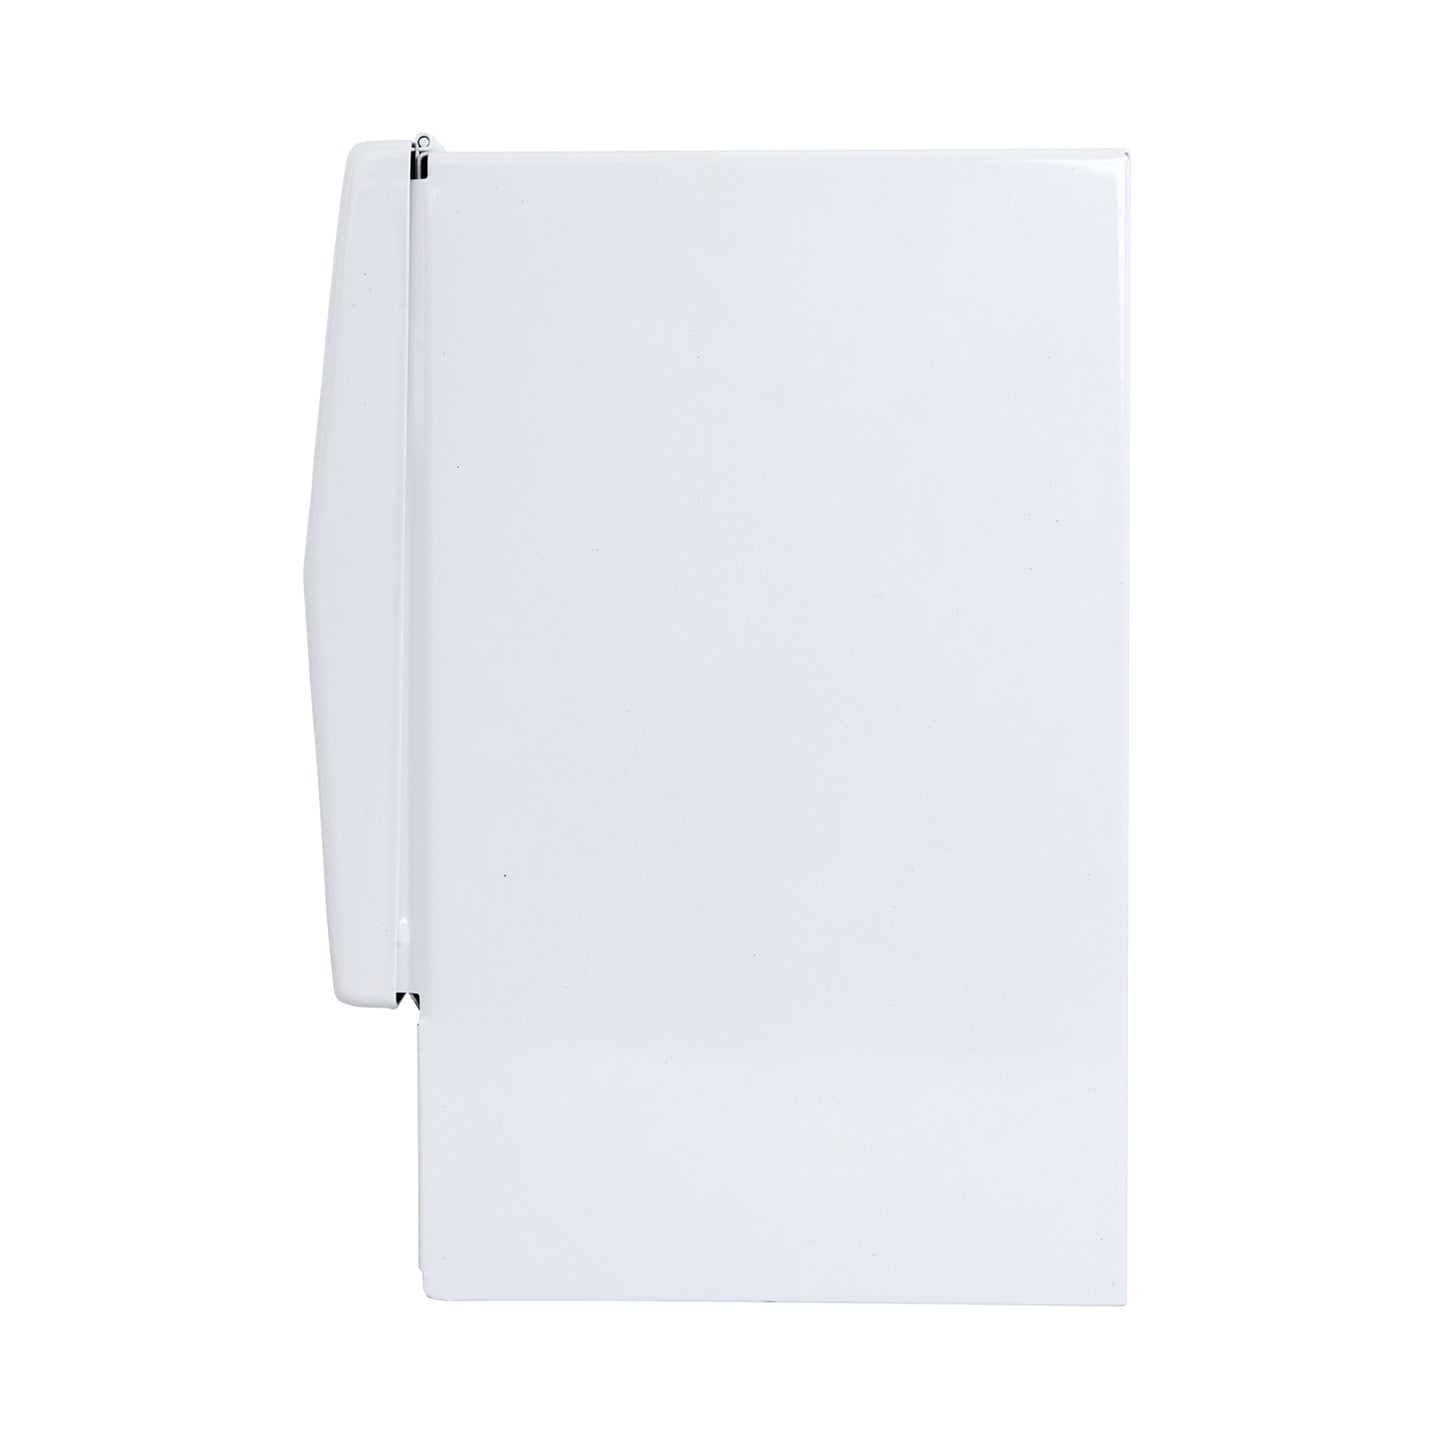 Paper towel dispenser Frost white side